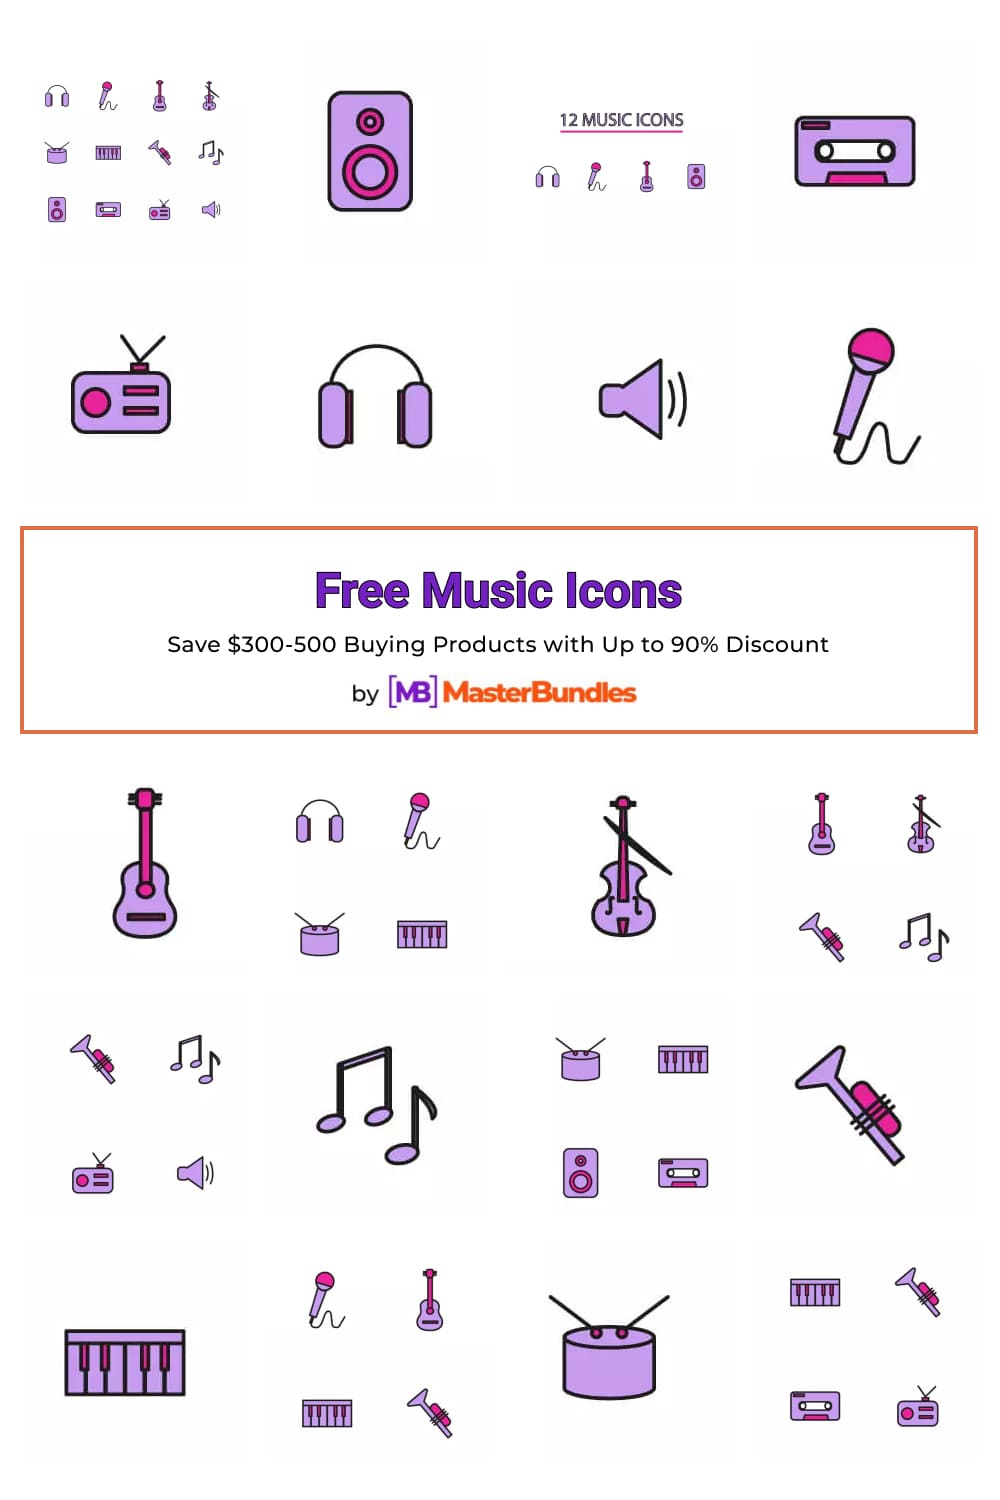 Free Music Icons Pinterest image.